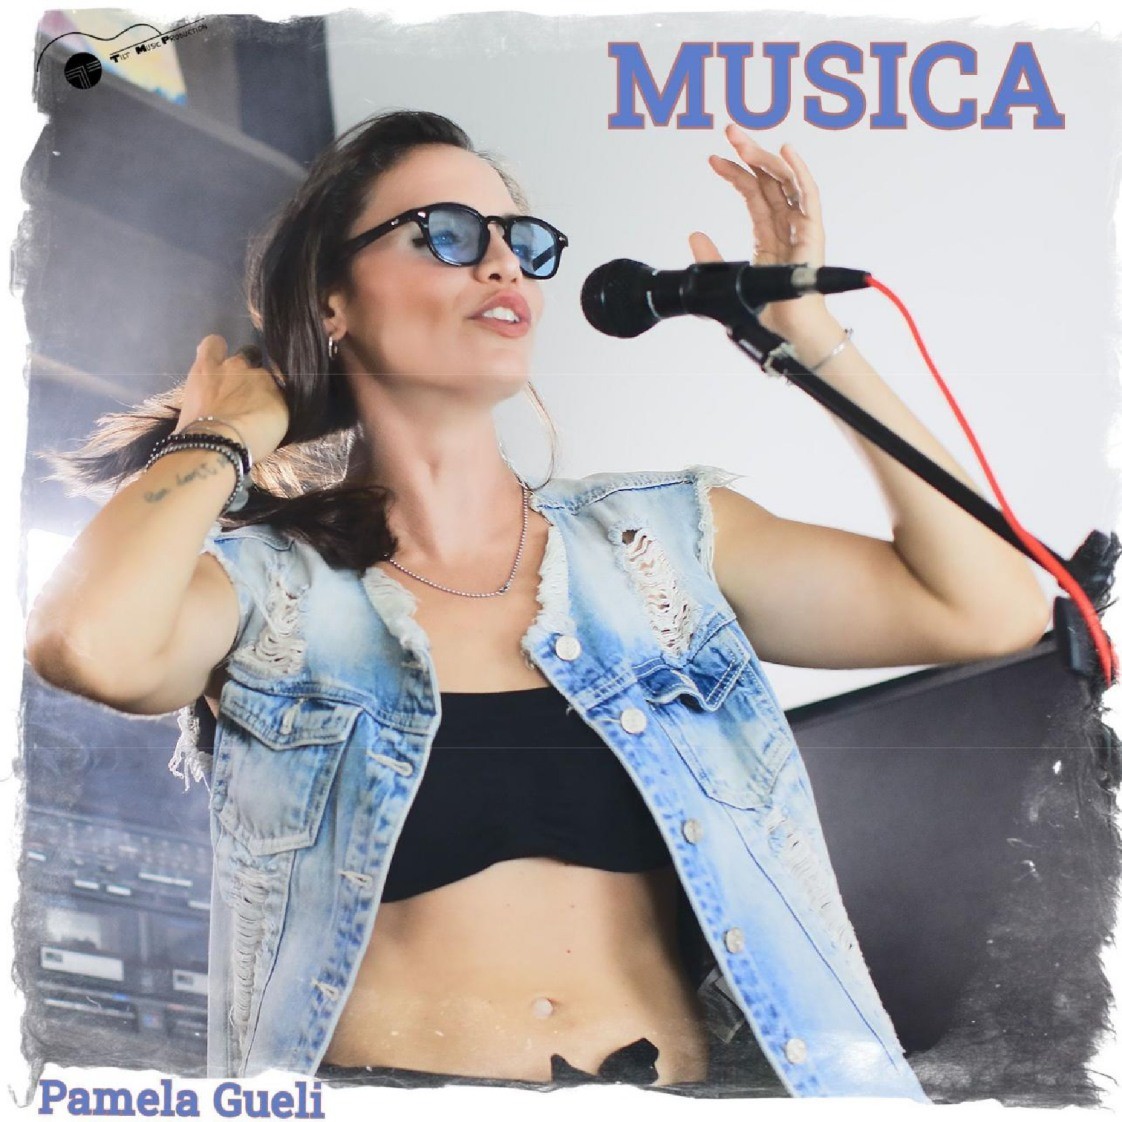  Pamela Gueli Musica